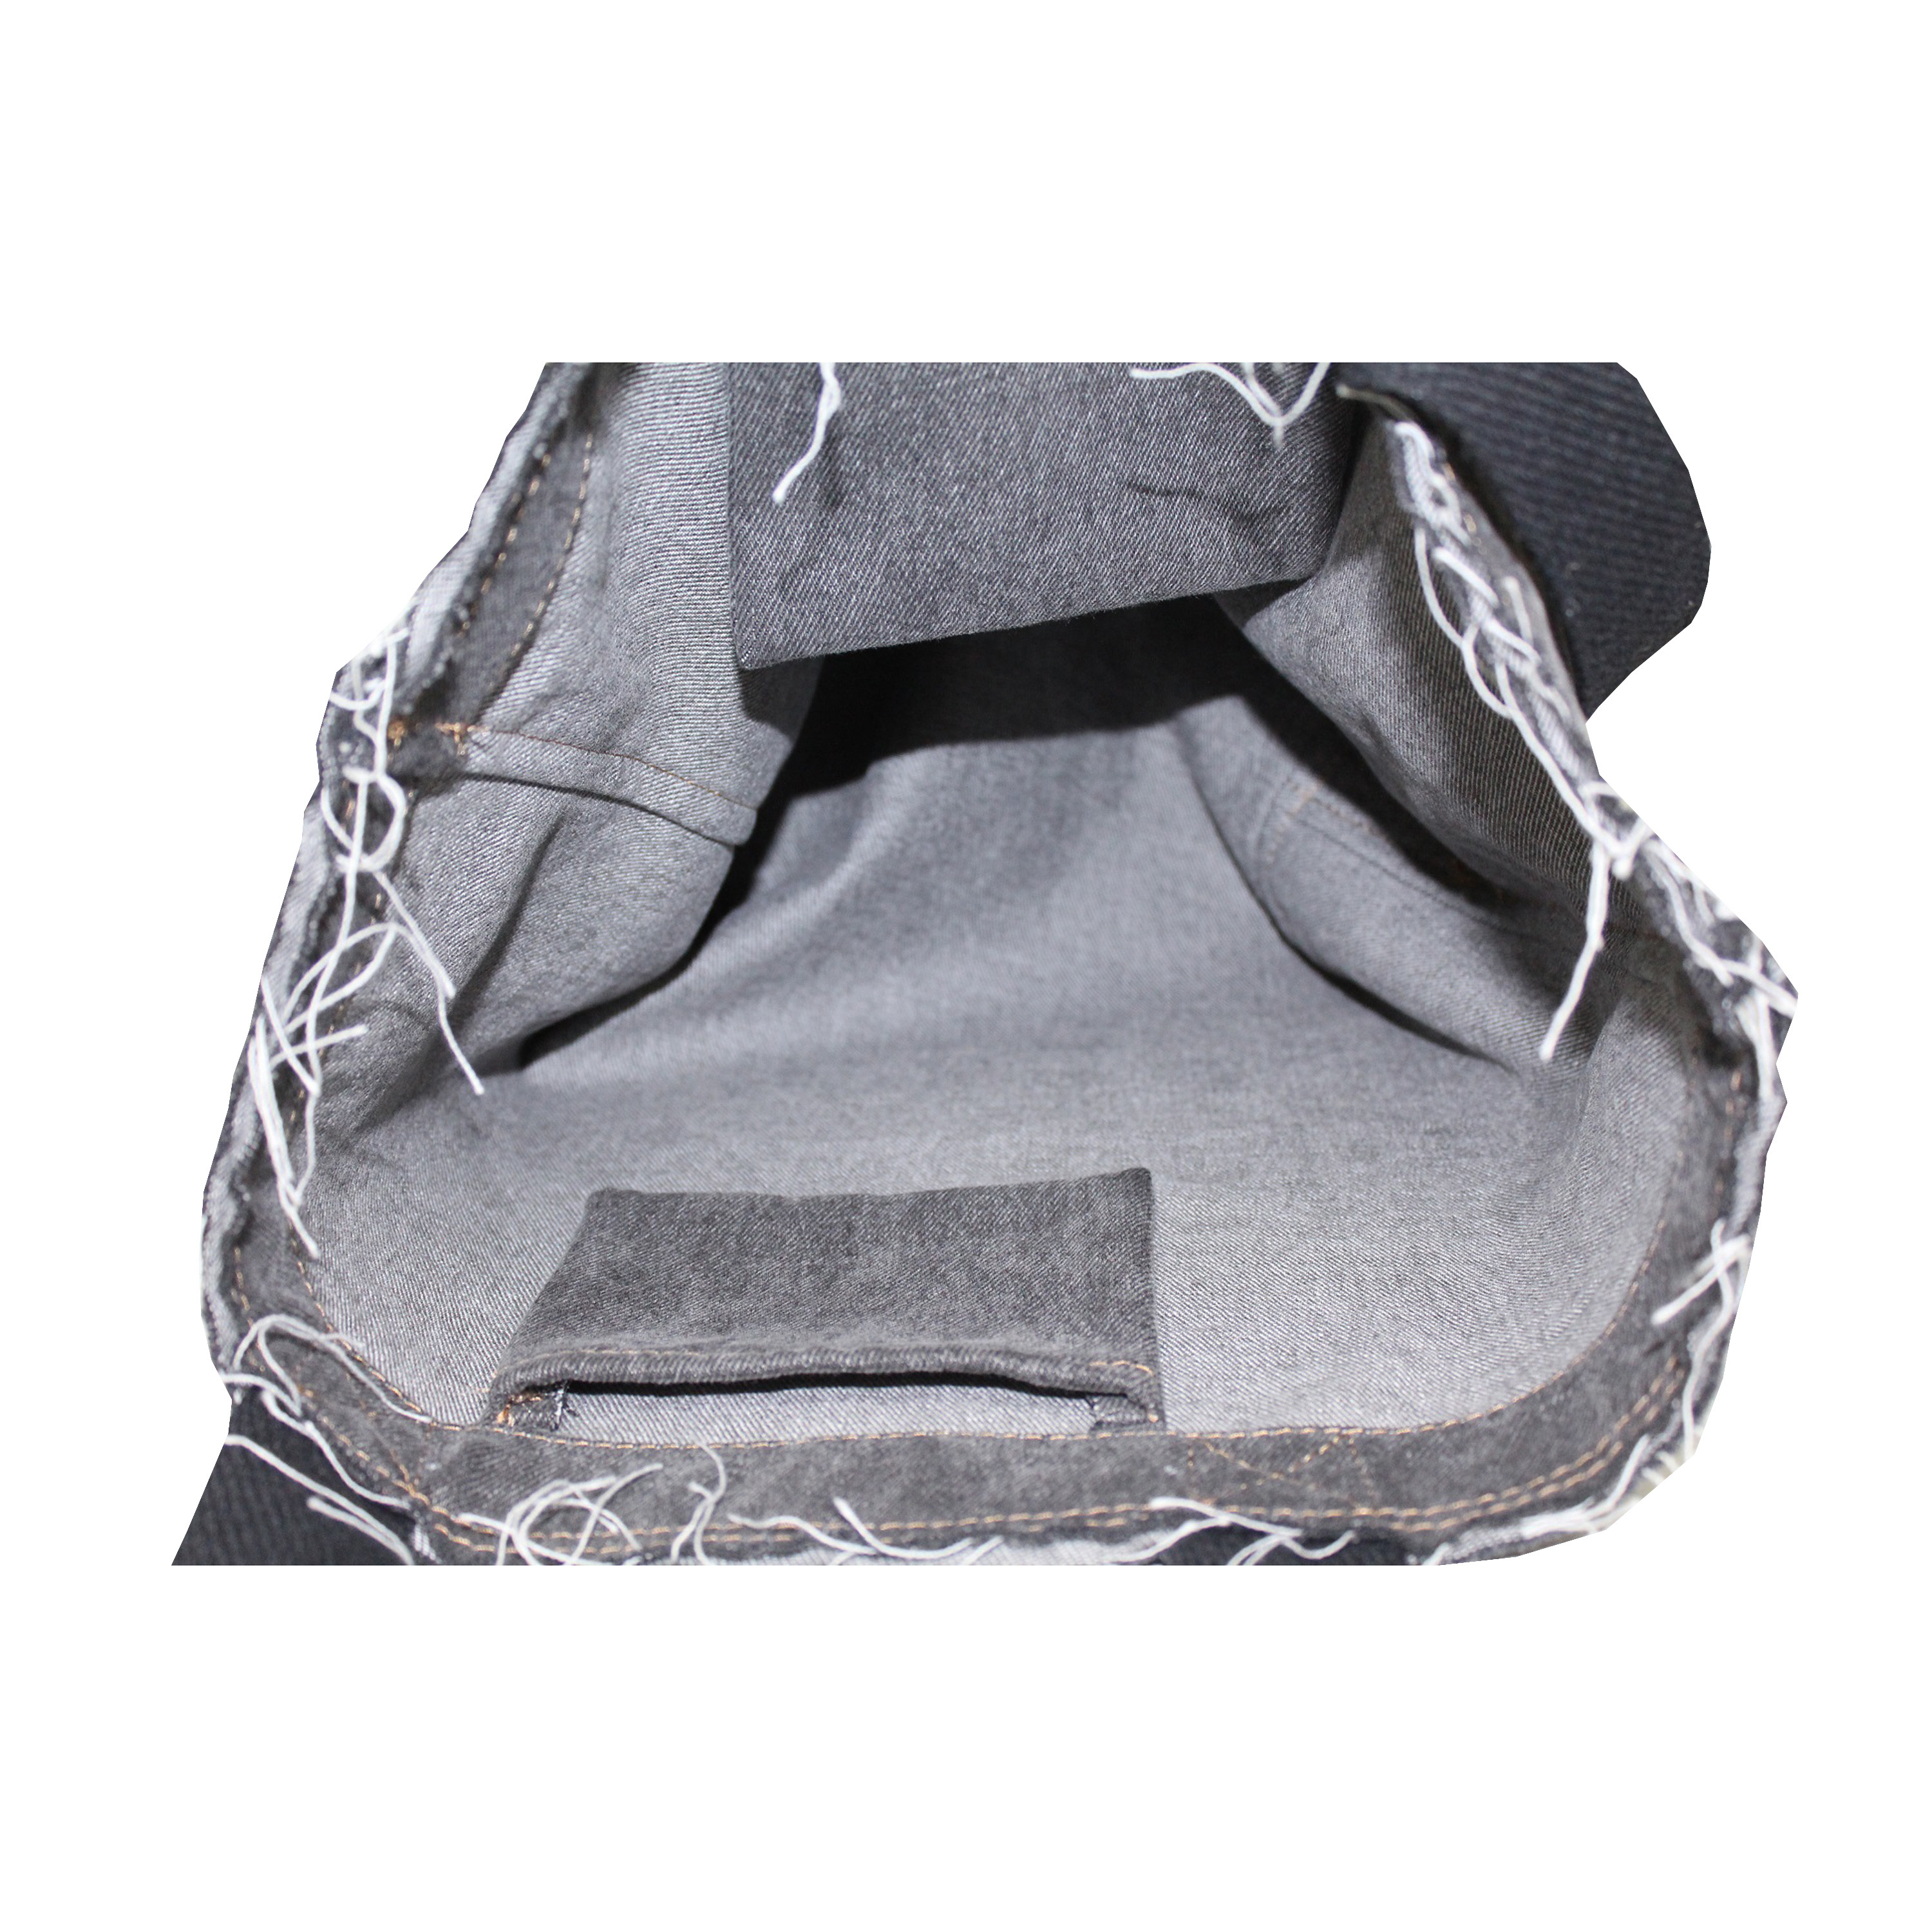 Denim Tote Bag With Web Handle